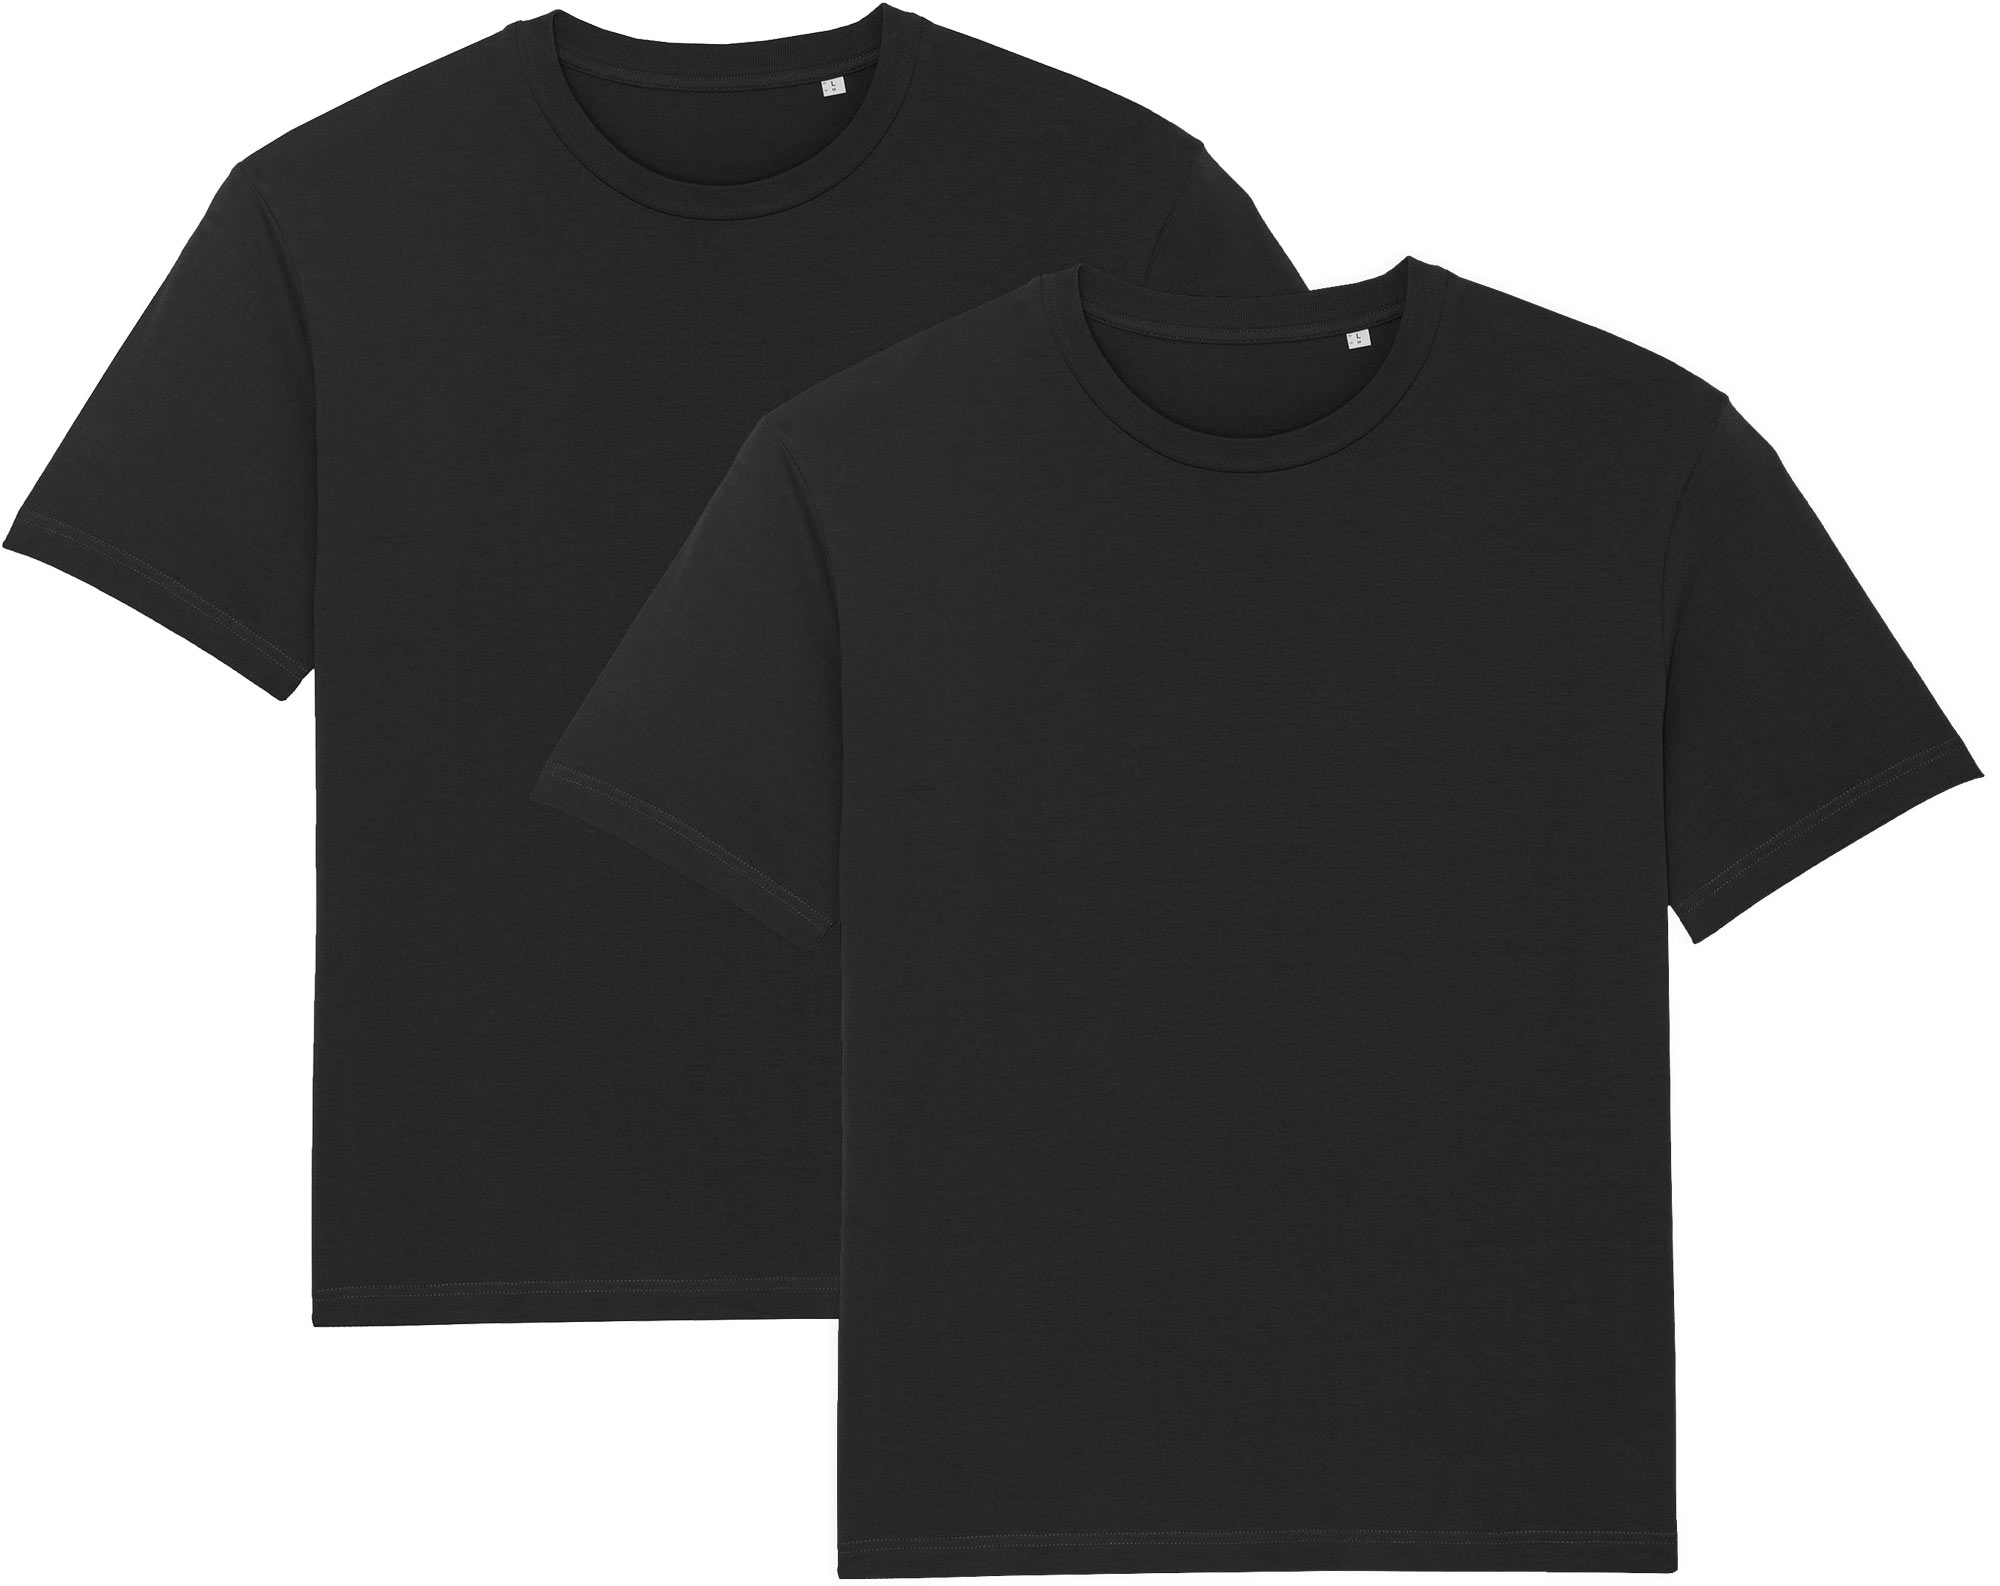 Veganes Oversize T-Shirt in schwarz im 2er-Pack